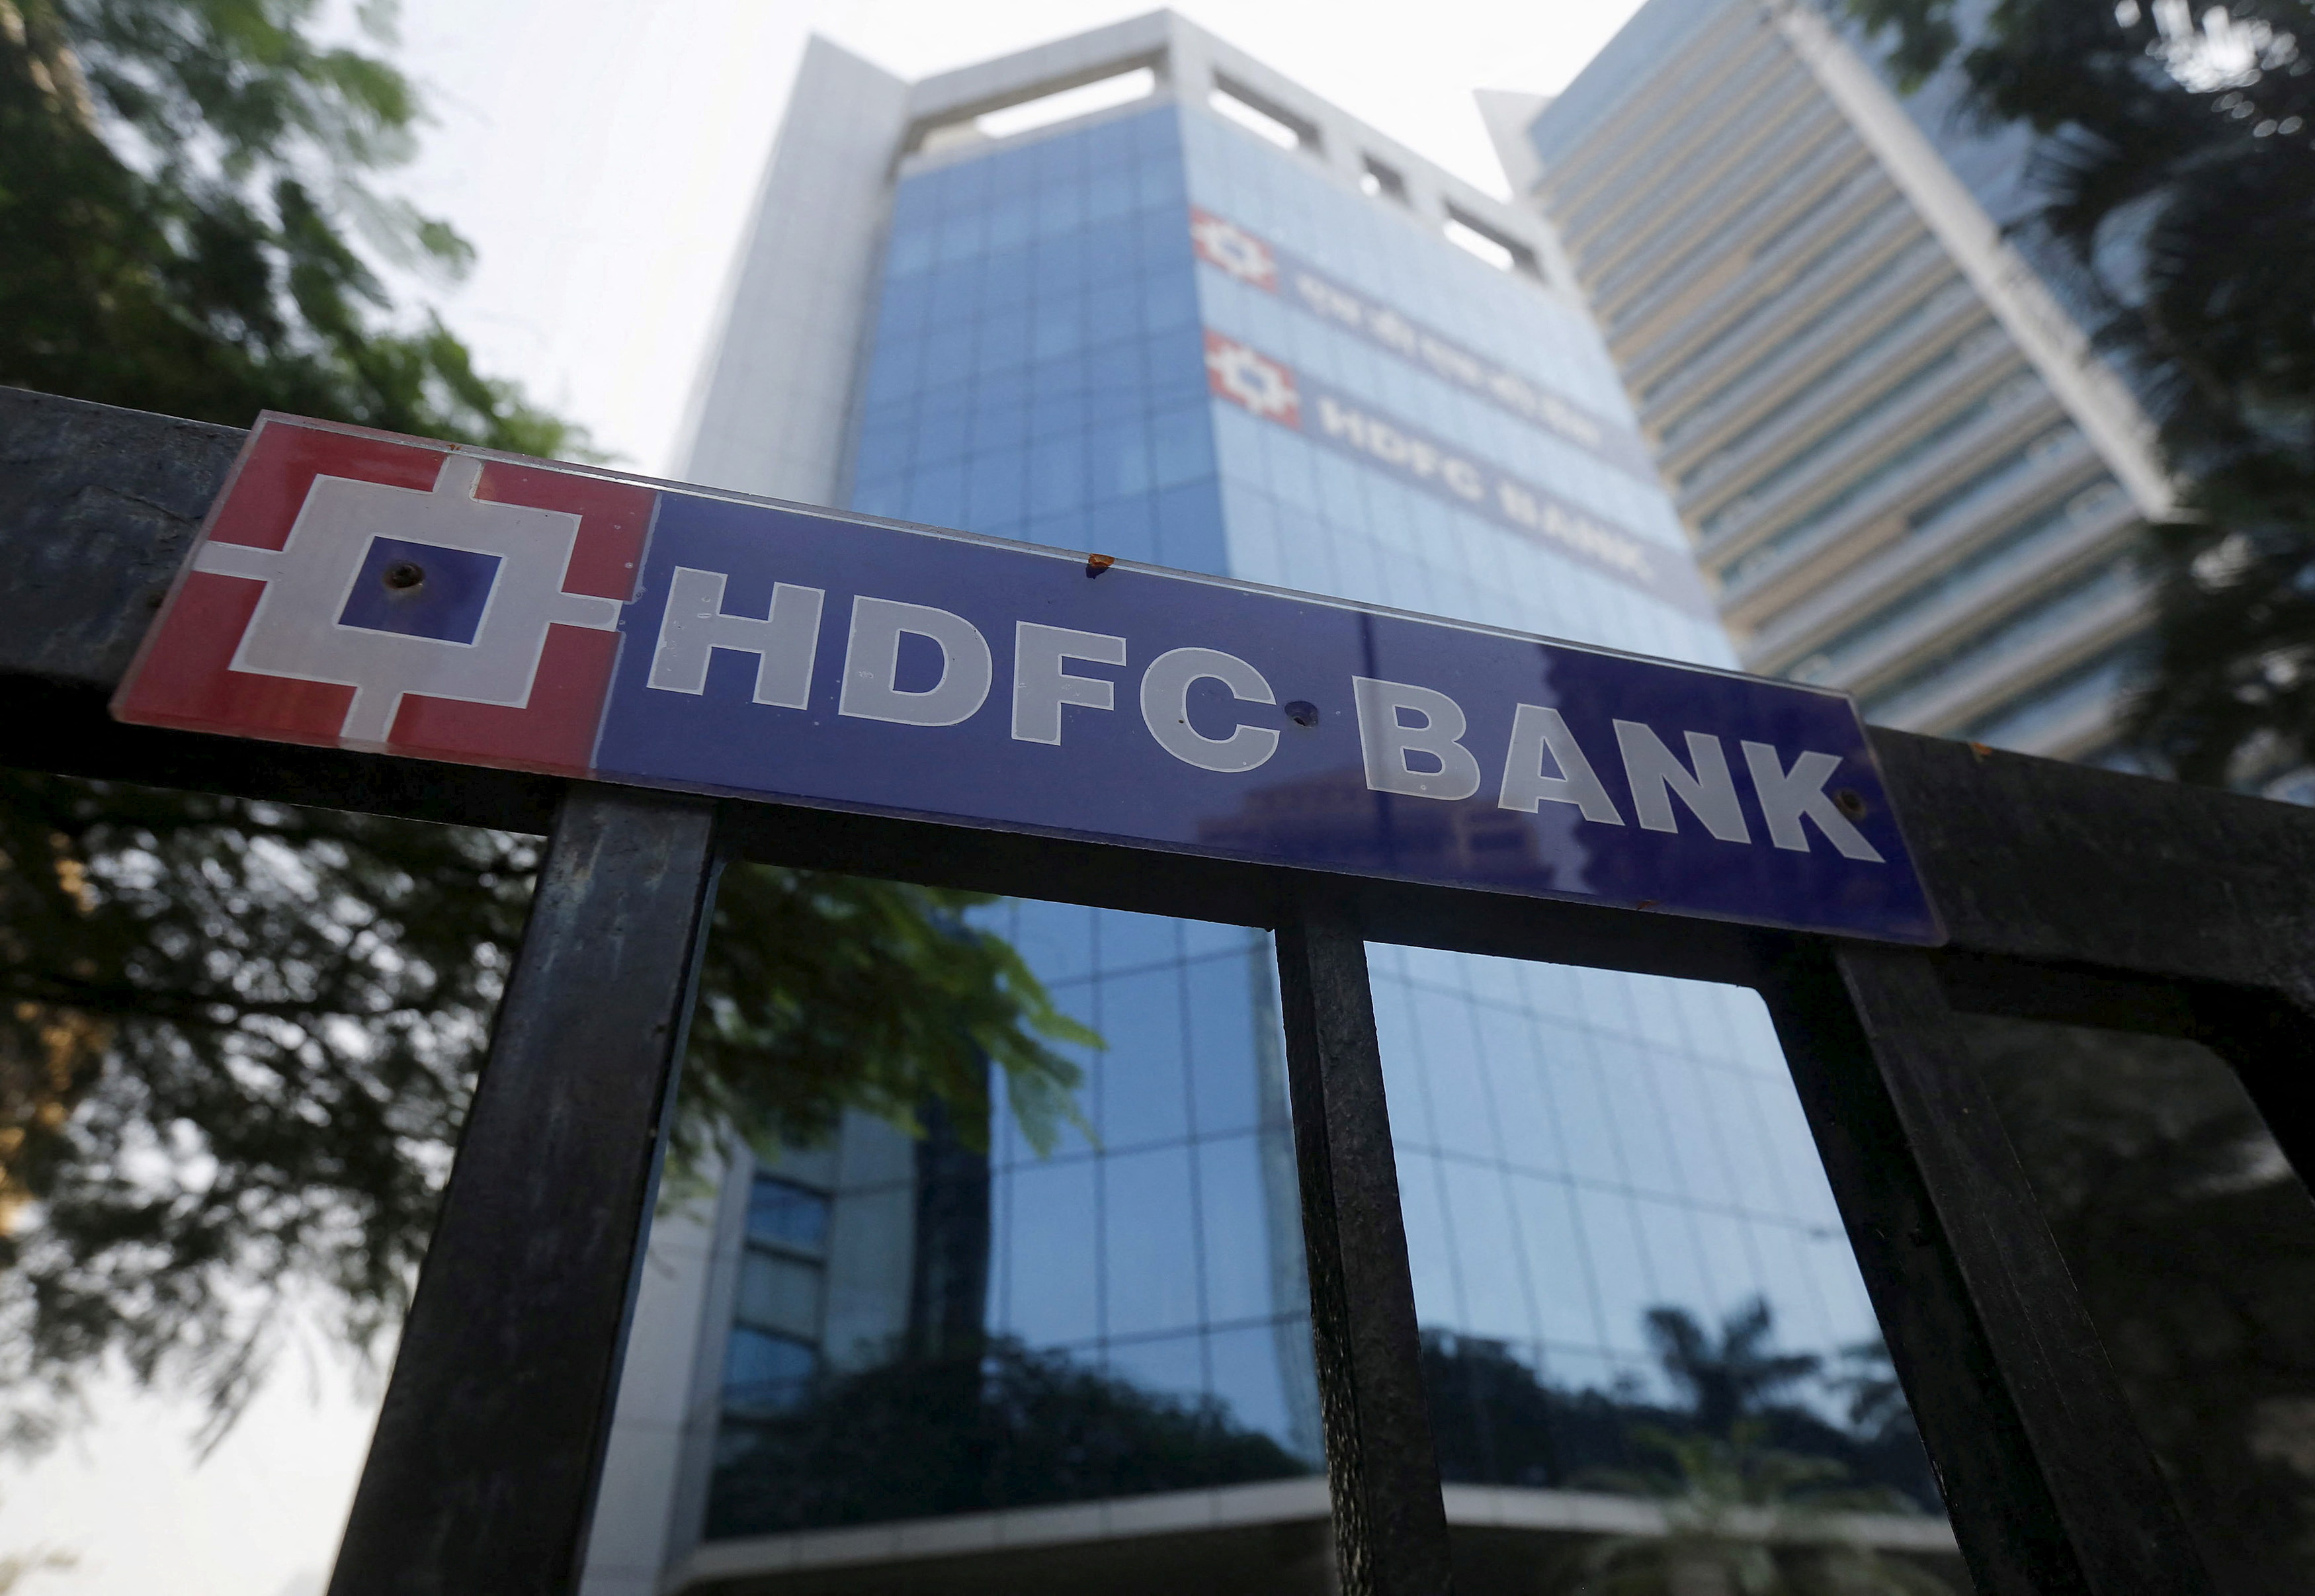 Is HDFC is an international bank?